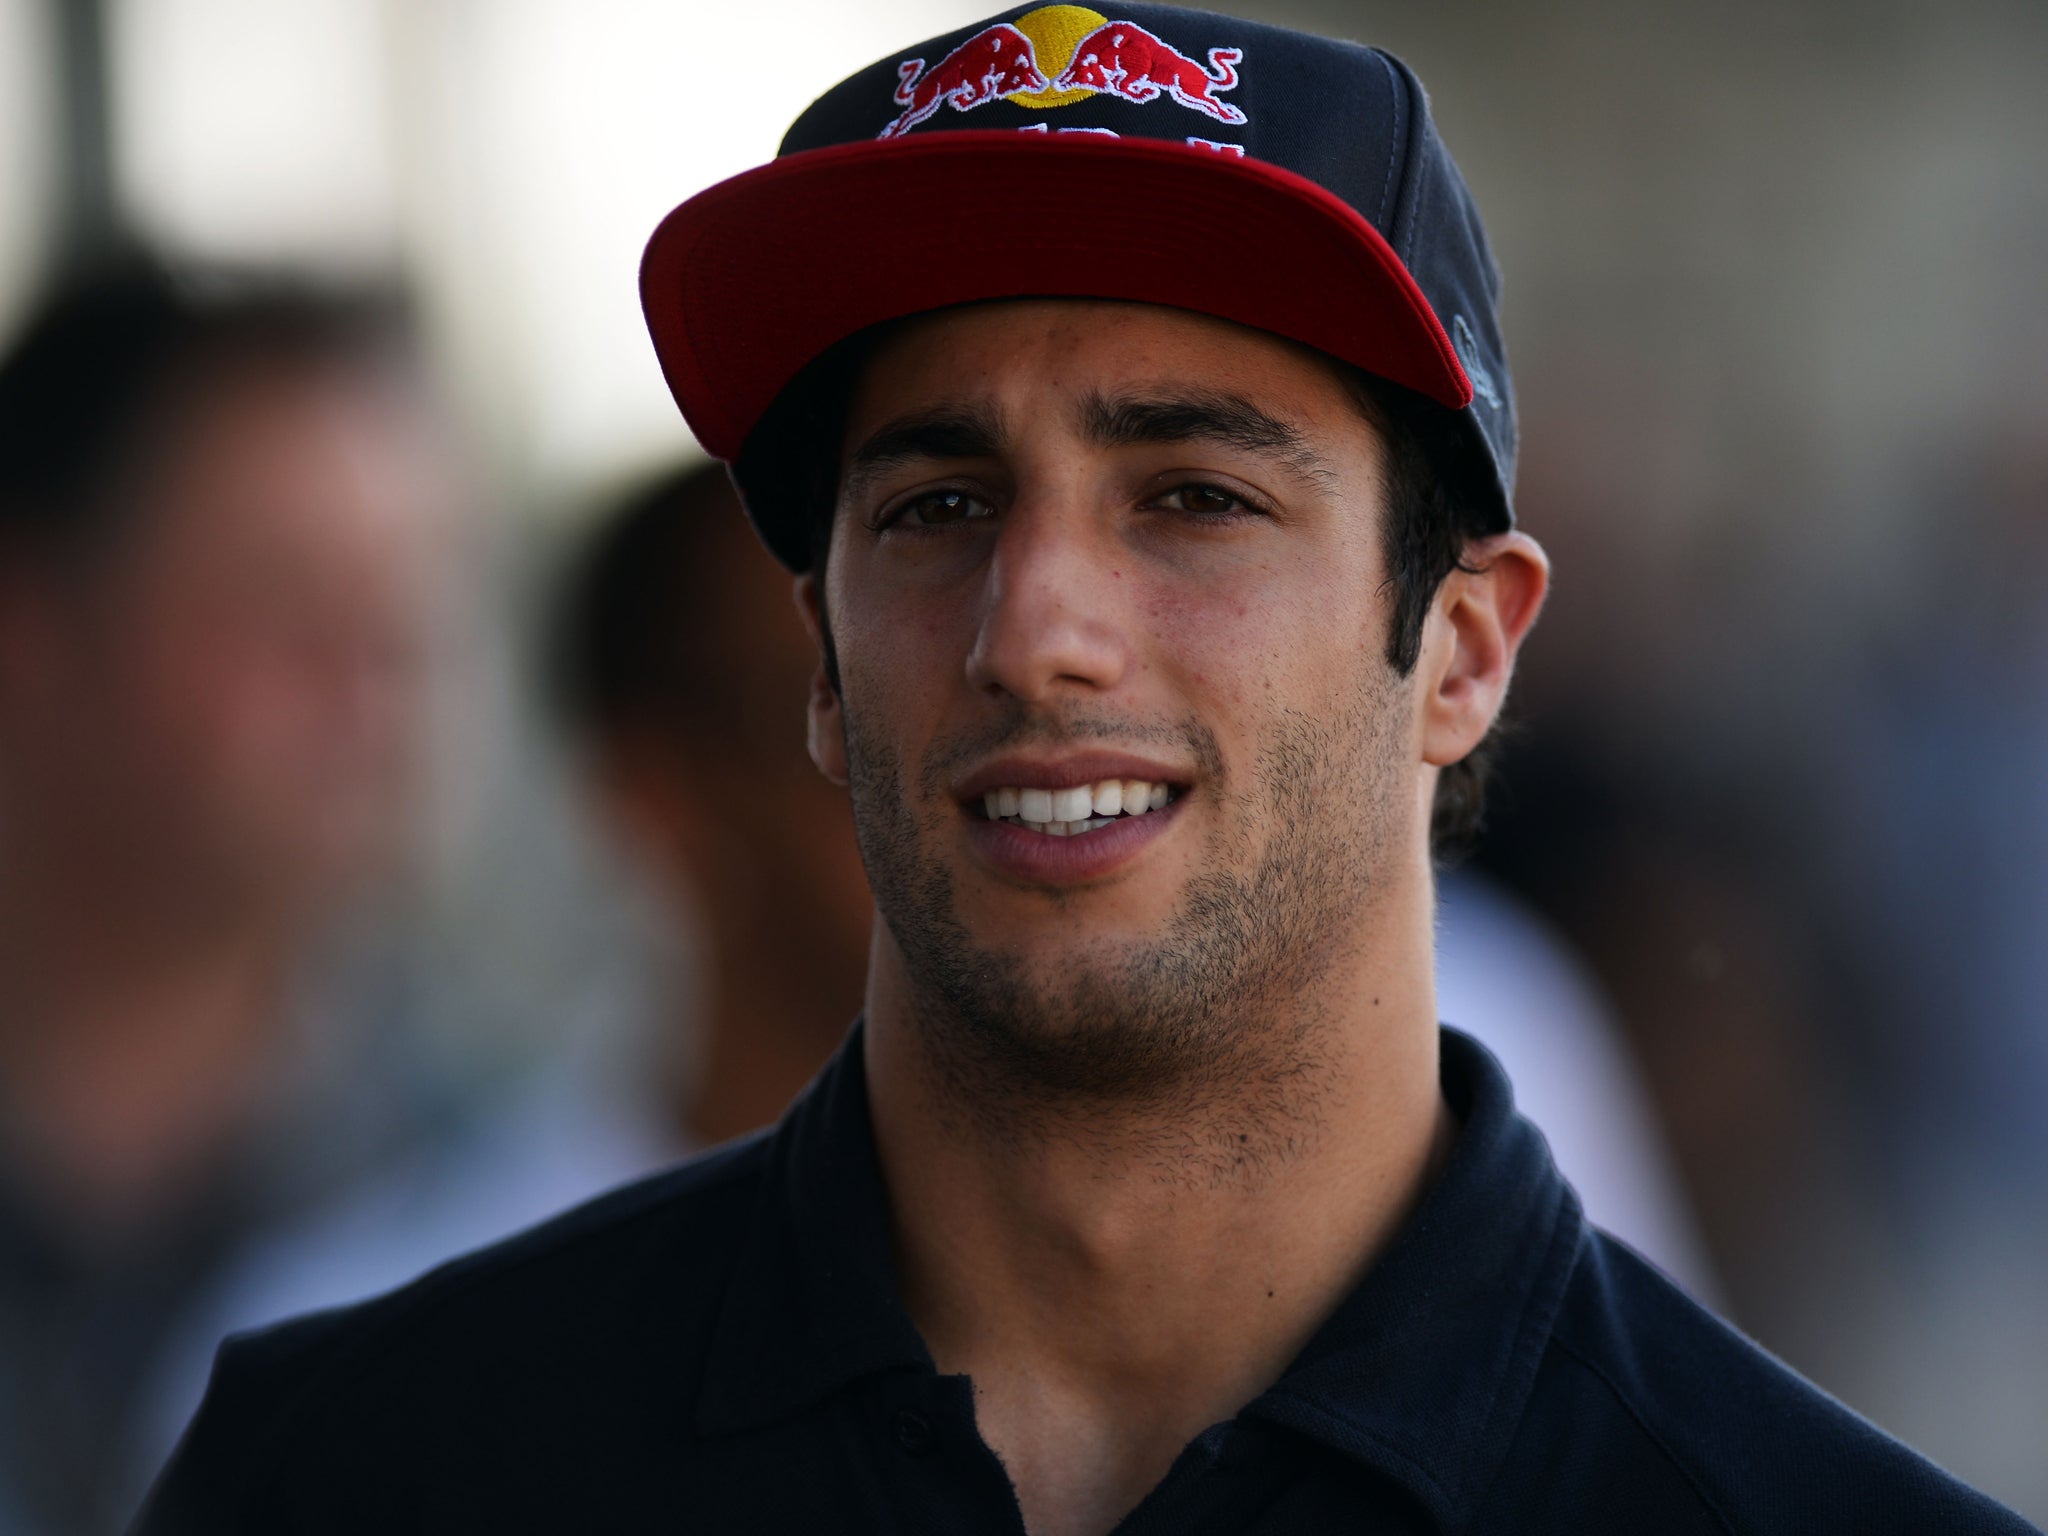 Daniel Ricciardo looks set to replace Mark Webber at Red Bull